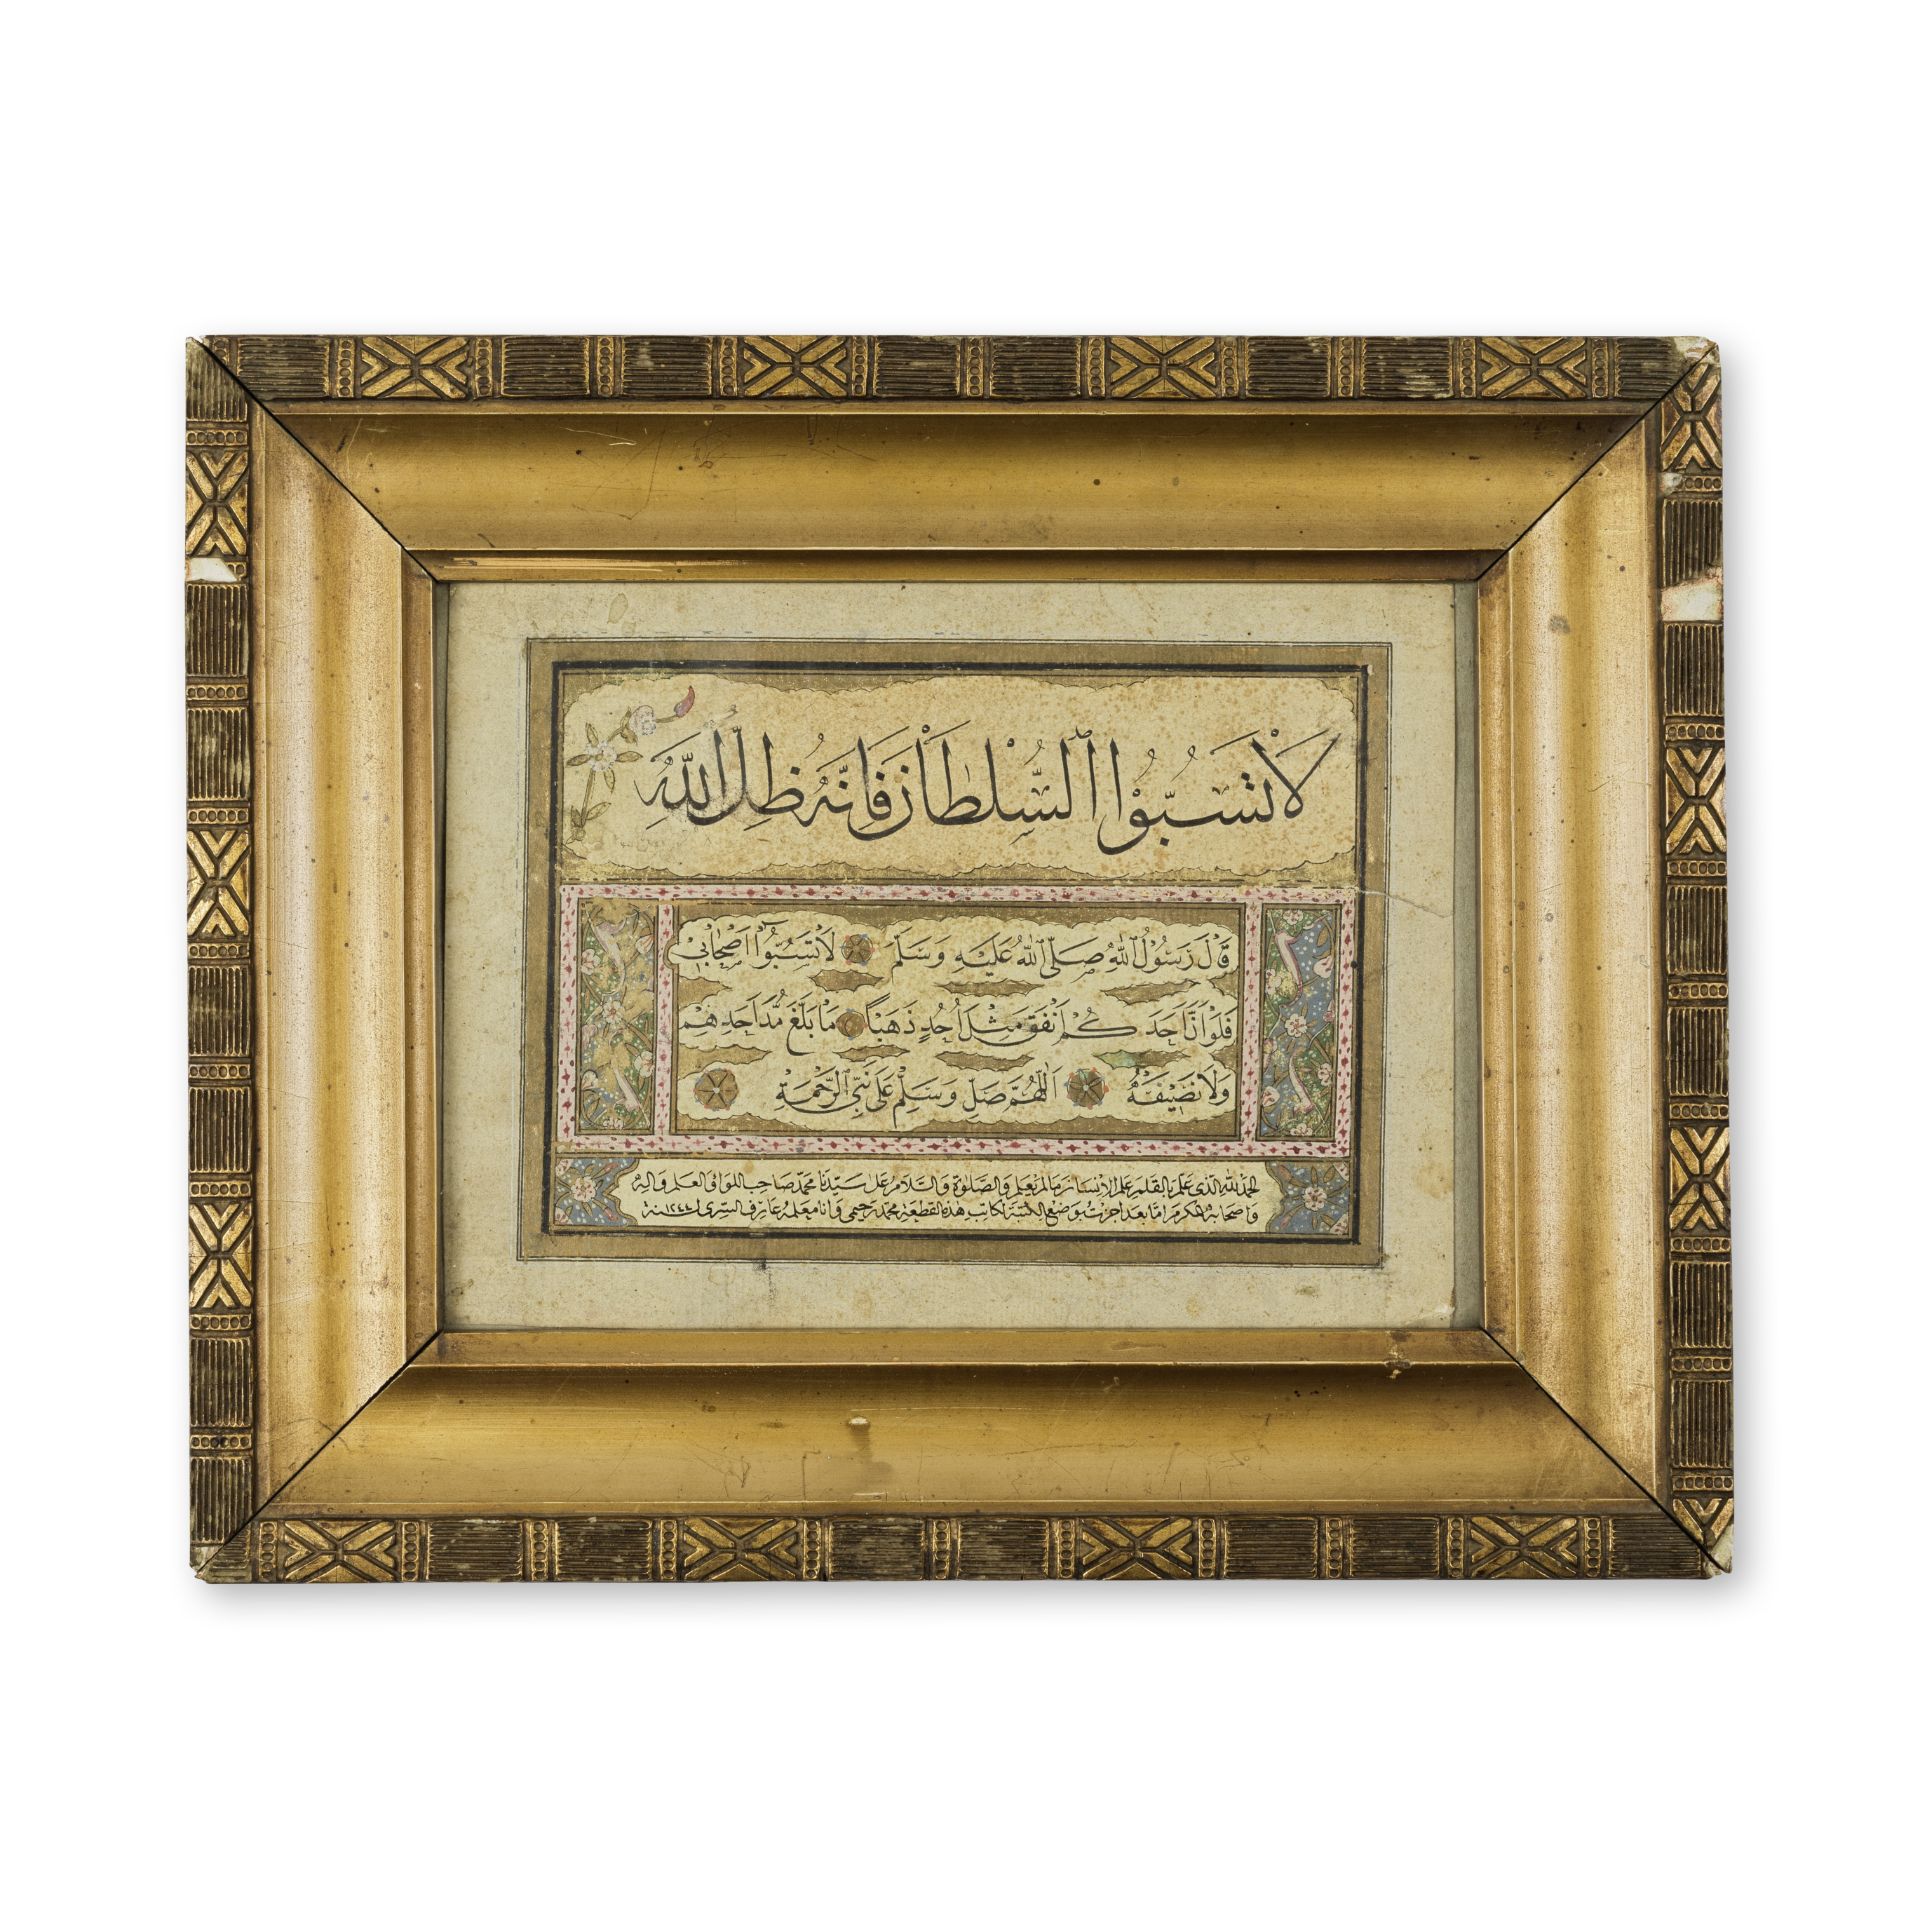 Dipl&#244;me de calligraphe enlumin&#233; (ijazet), sign&#233; Muhammad Hamid, Turquie Ottomane,...